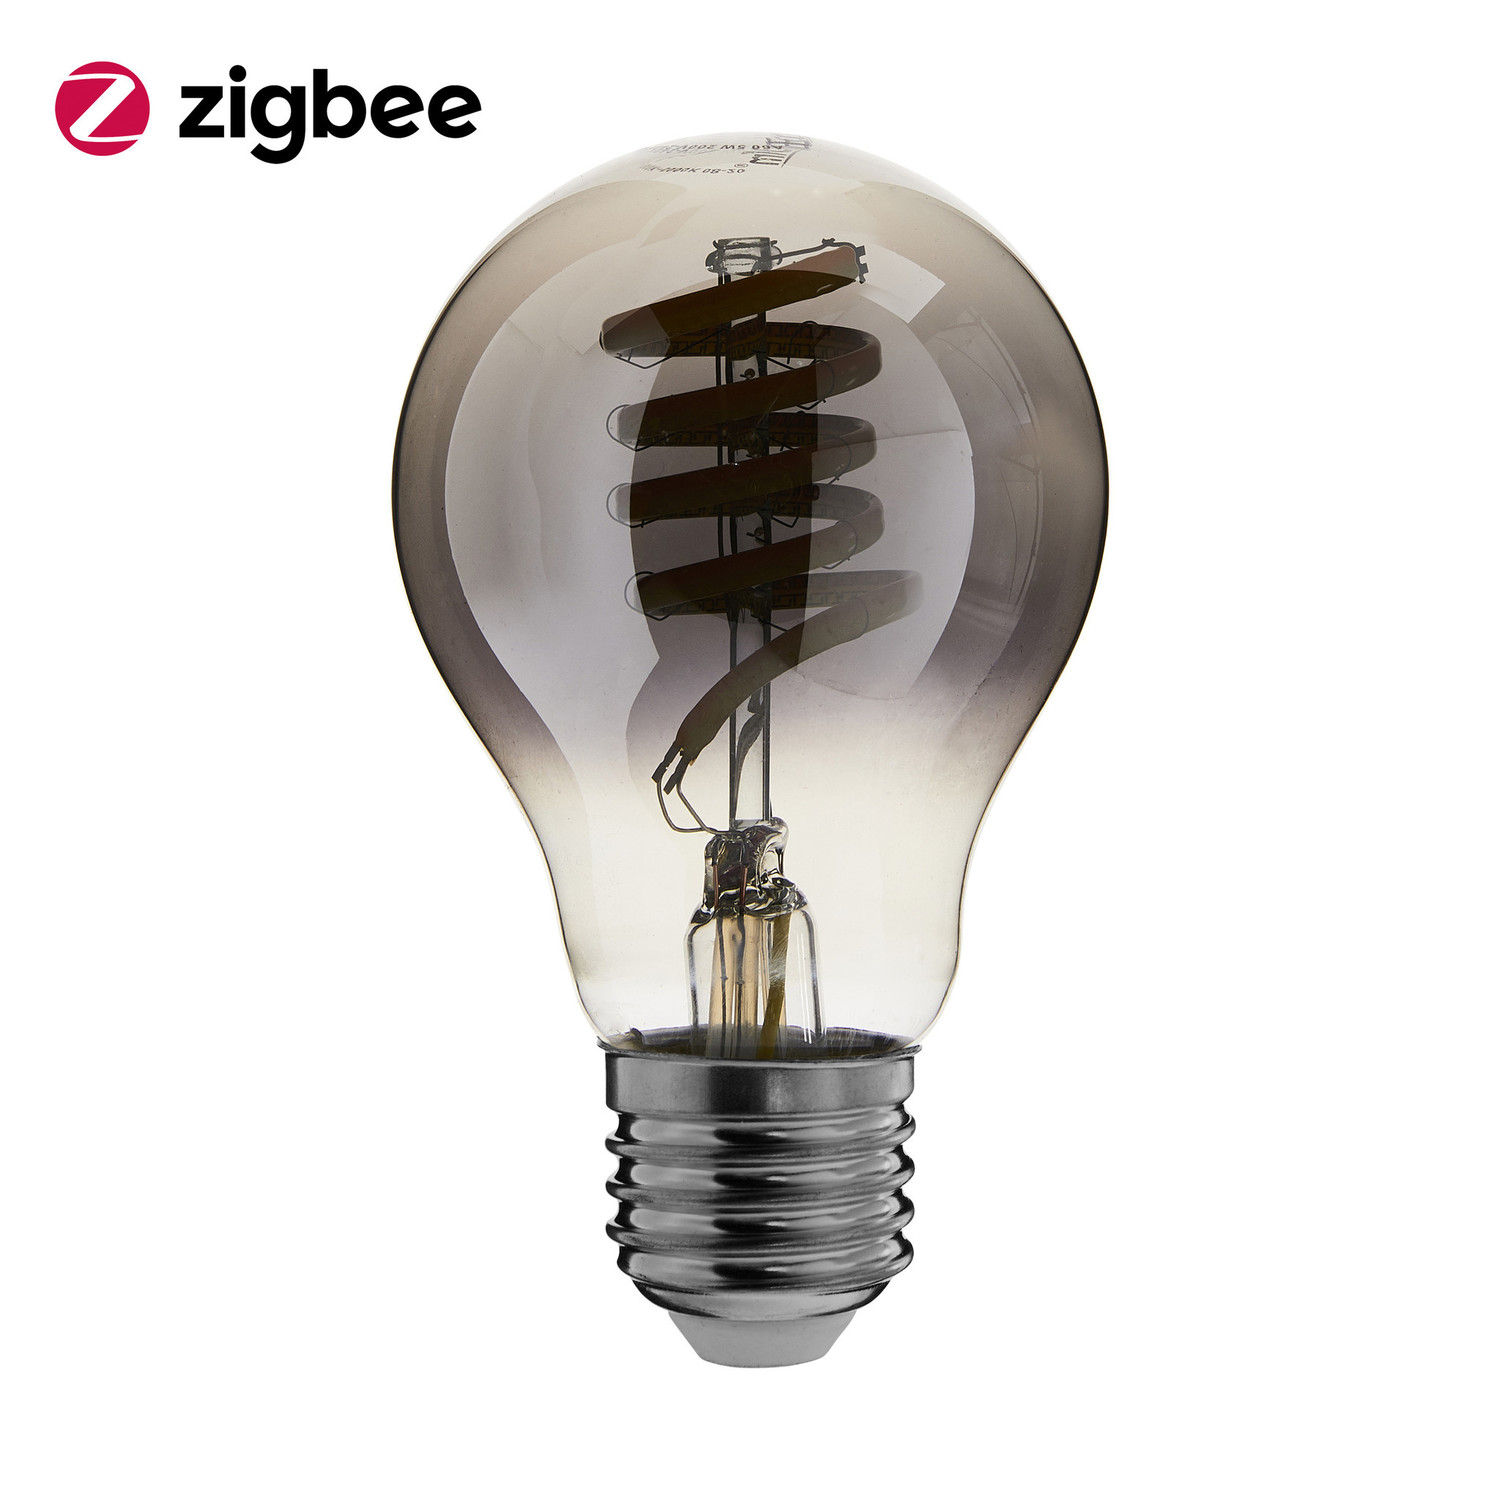 Commissie niemand Vesting EcoDim Zigbee led filament lamp dimbaar E27, bulb A60, Smokey 1800K-5000K -  SlimmeDingen.nl